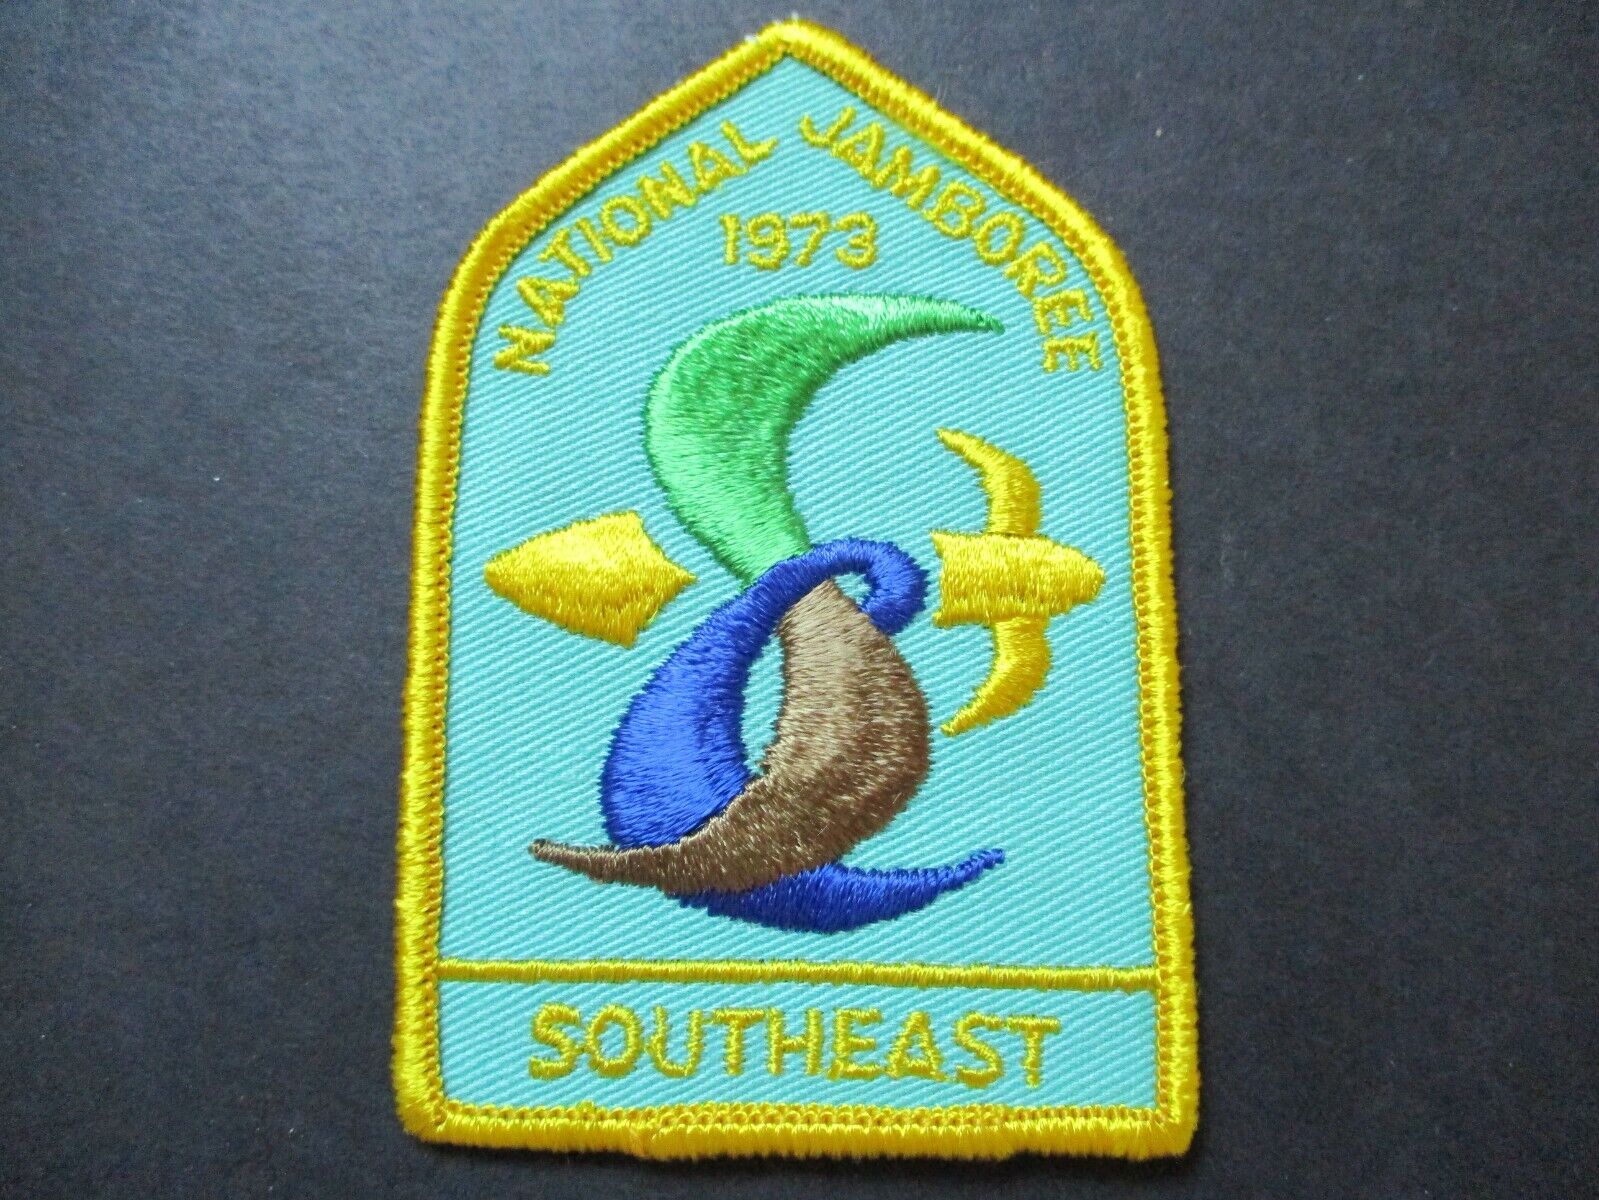 1973 National Jamboree Southeast yellow border boy scout patch